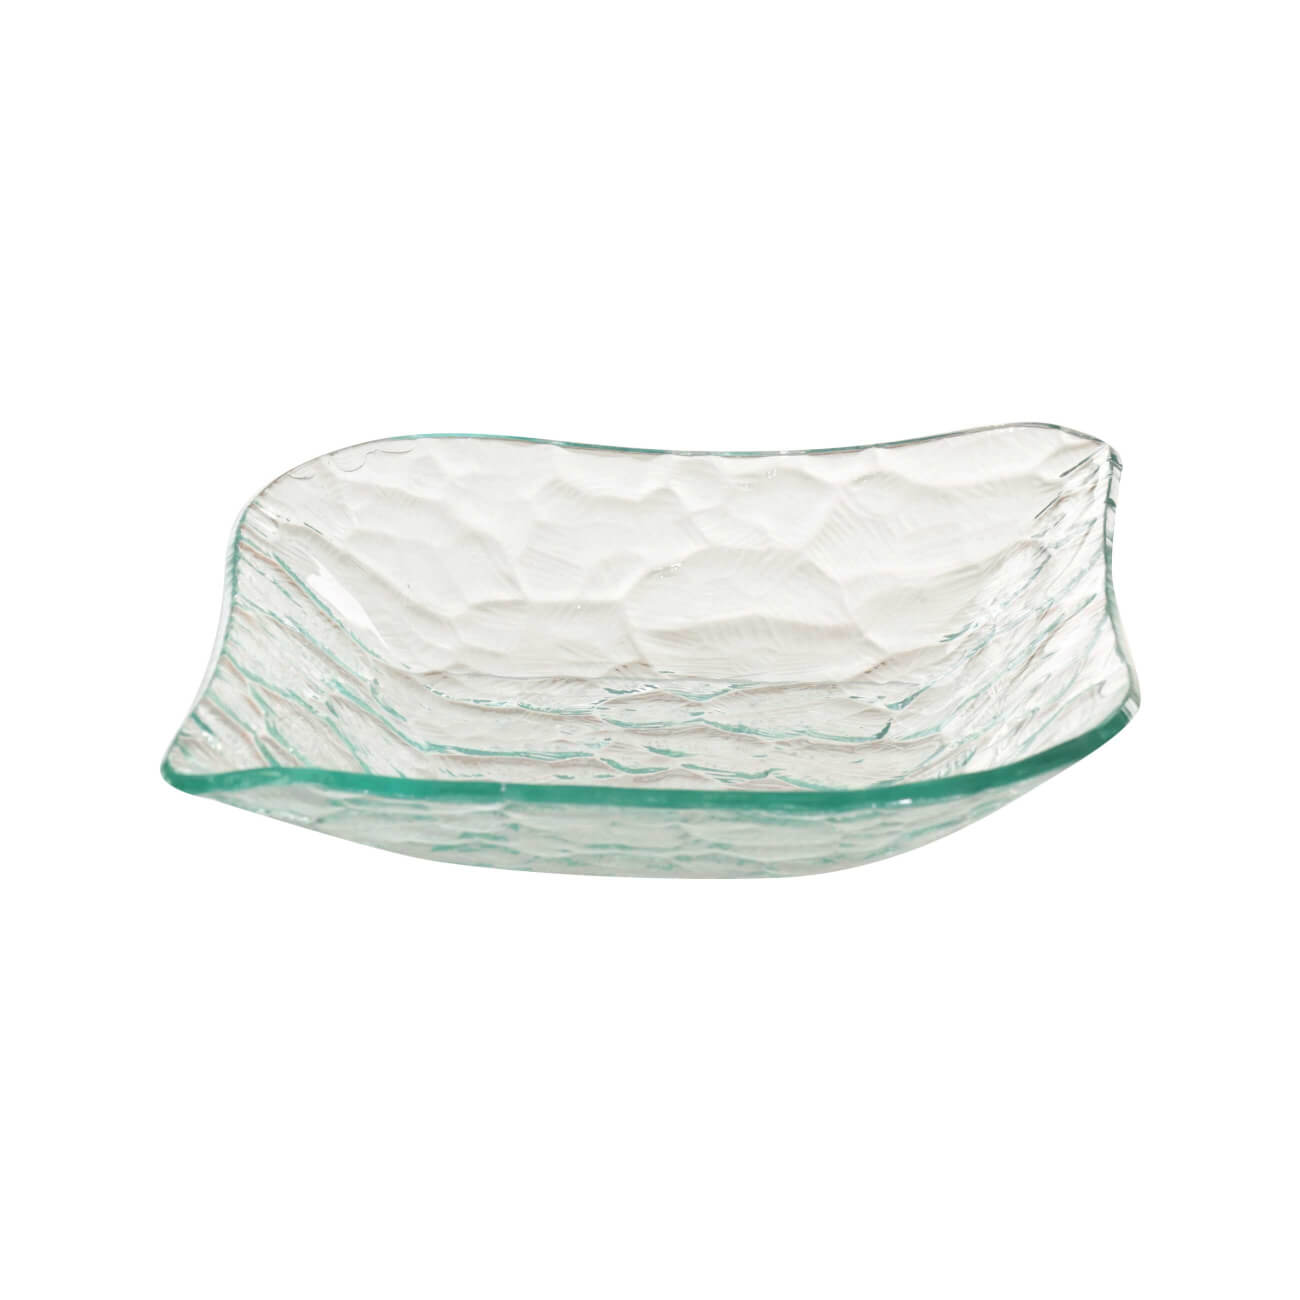 Dish, 20x16 cm, glass, turquoise, Clear color изображение № 1